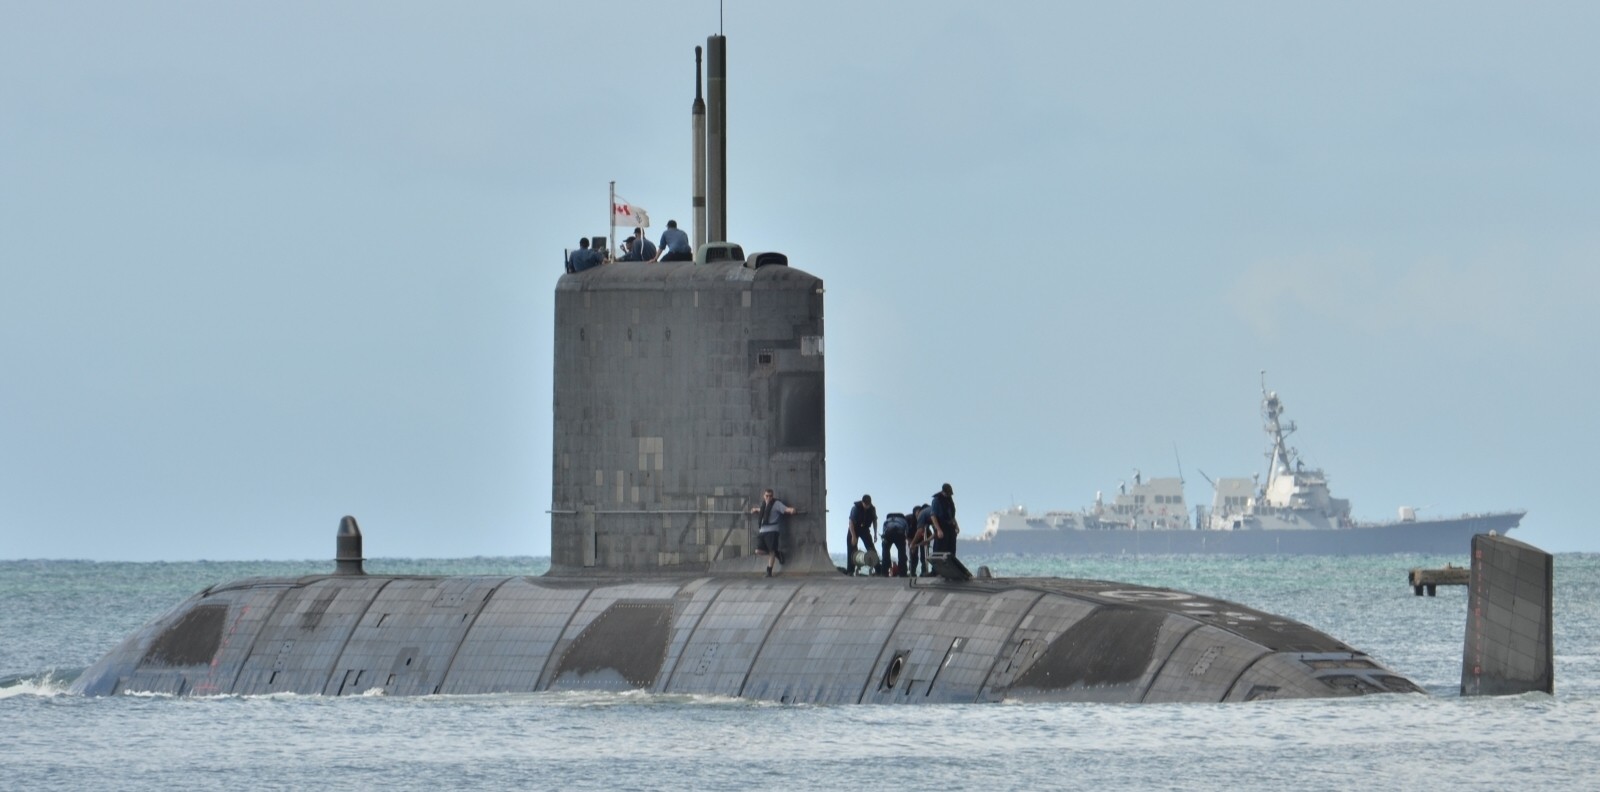 ssk-876 hmcs victoria upholder class attack submarine hunter killer ncsm royal canadian navy 17 cammell laird birkenhead